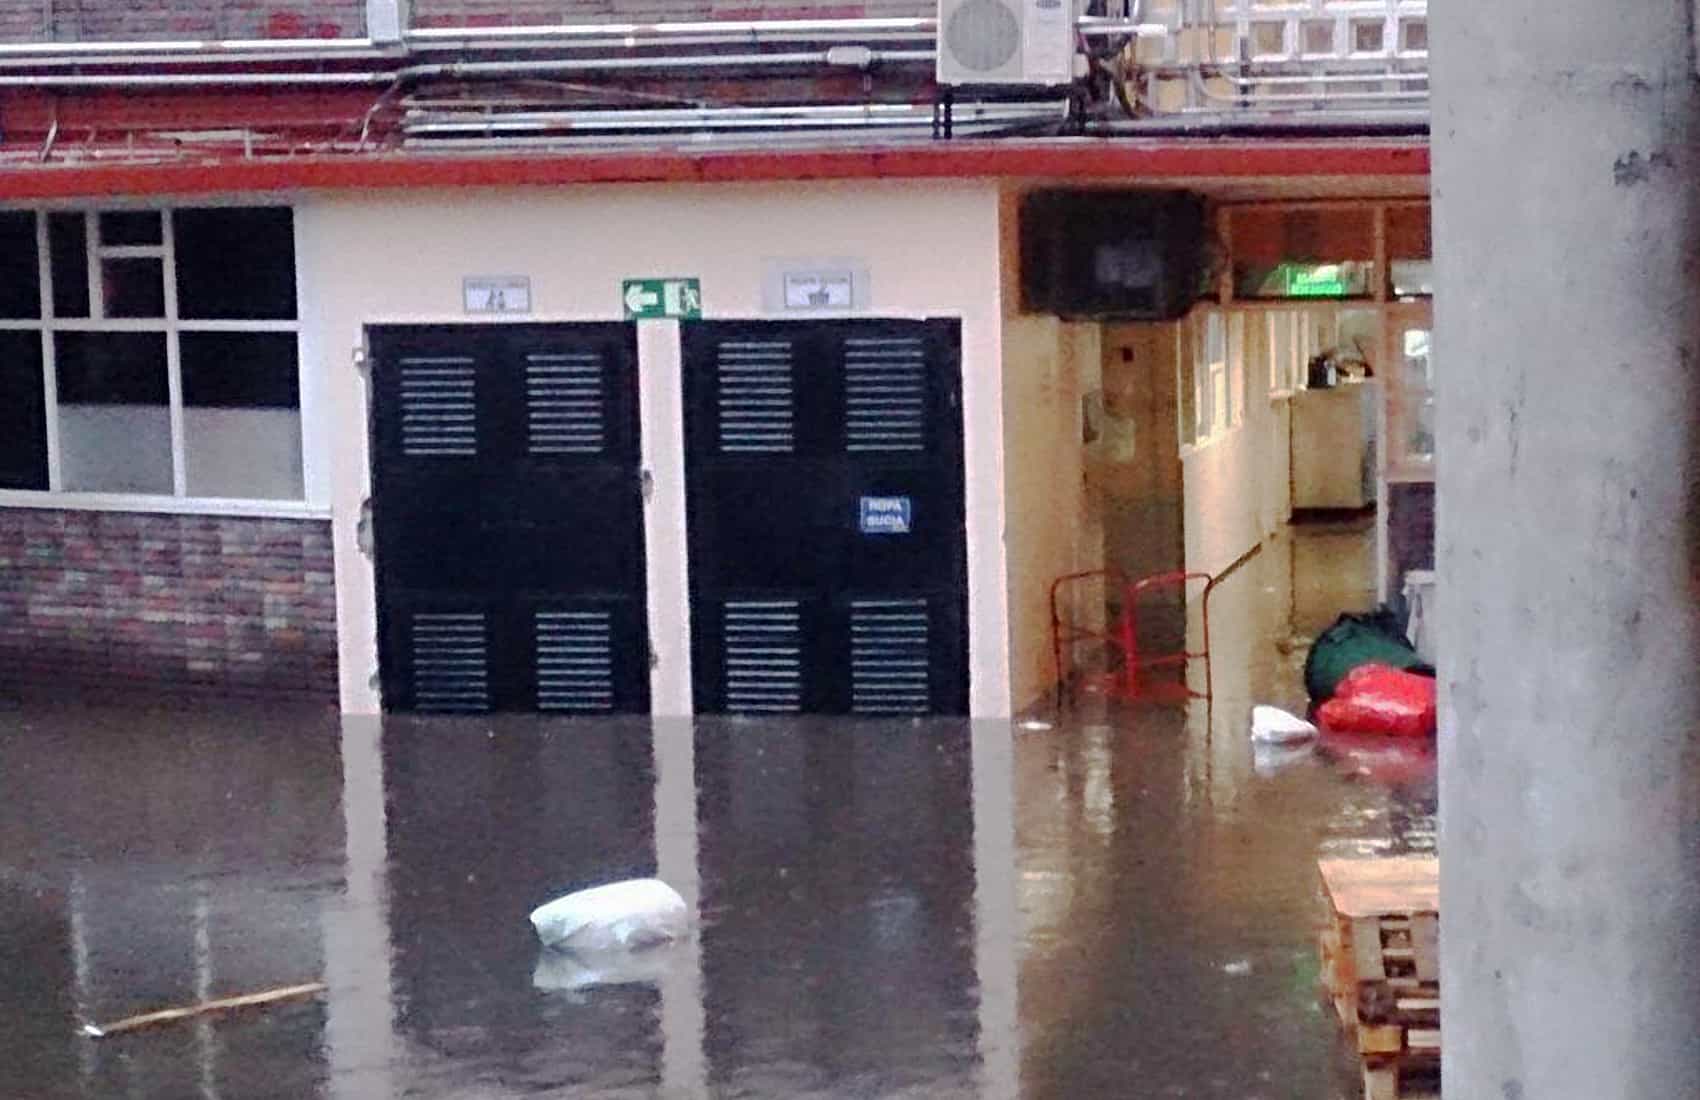 Flooding at National Children's Hospital